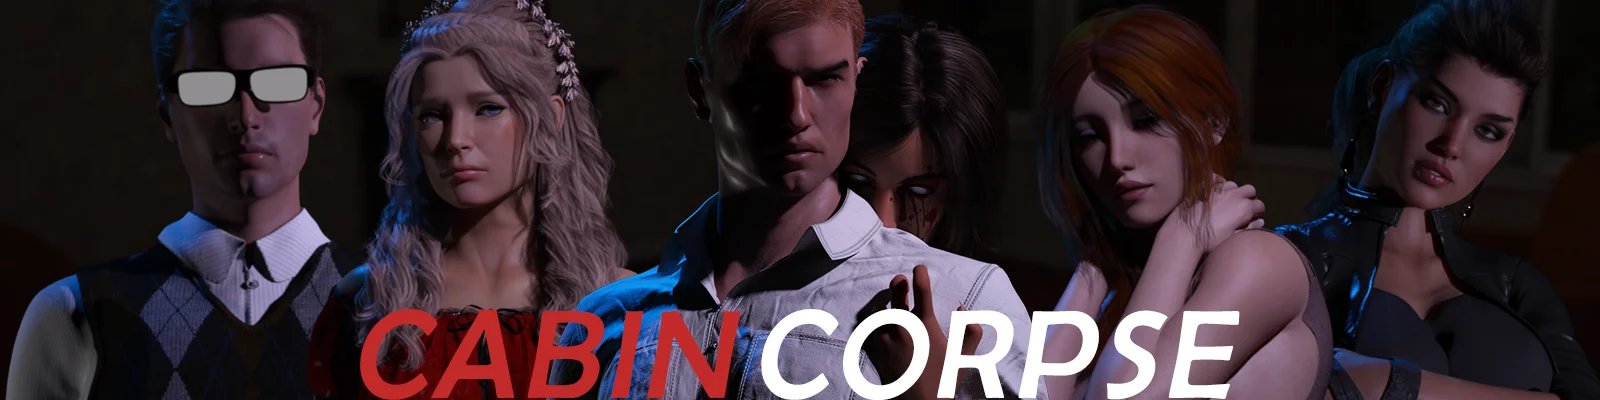 Cabin Corpse v.0.4.6